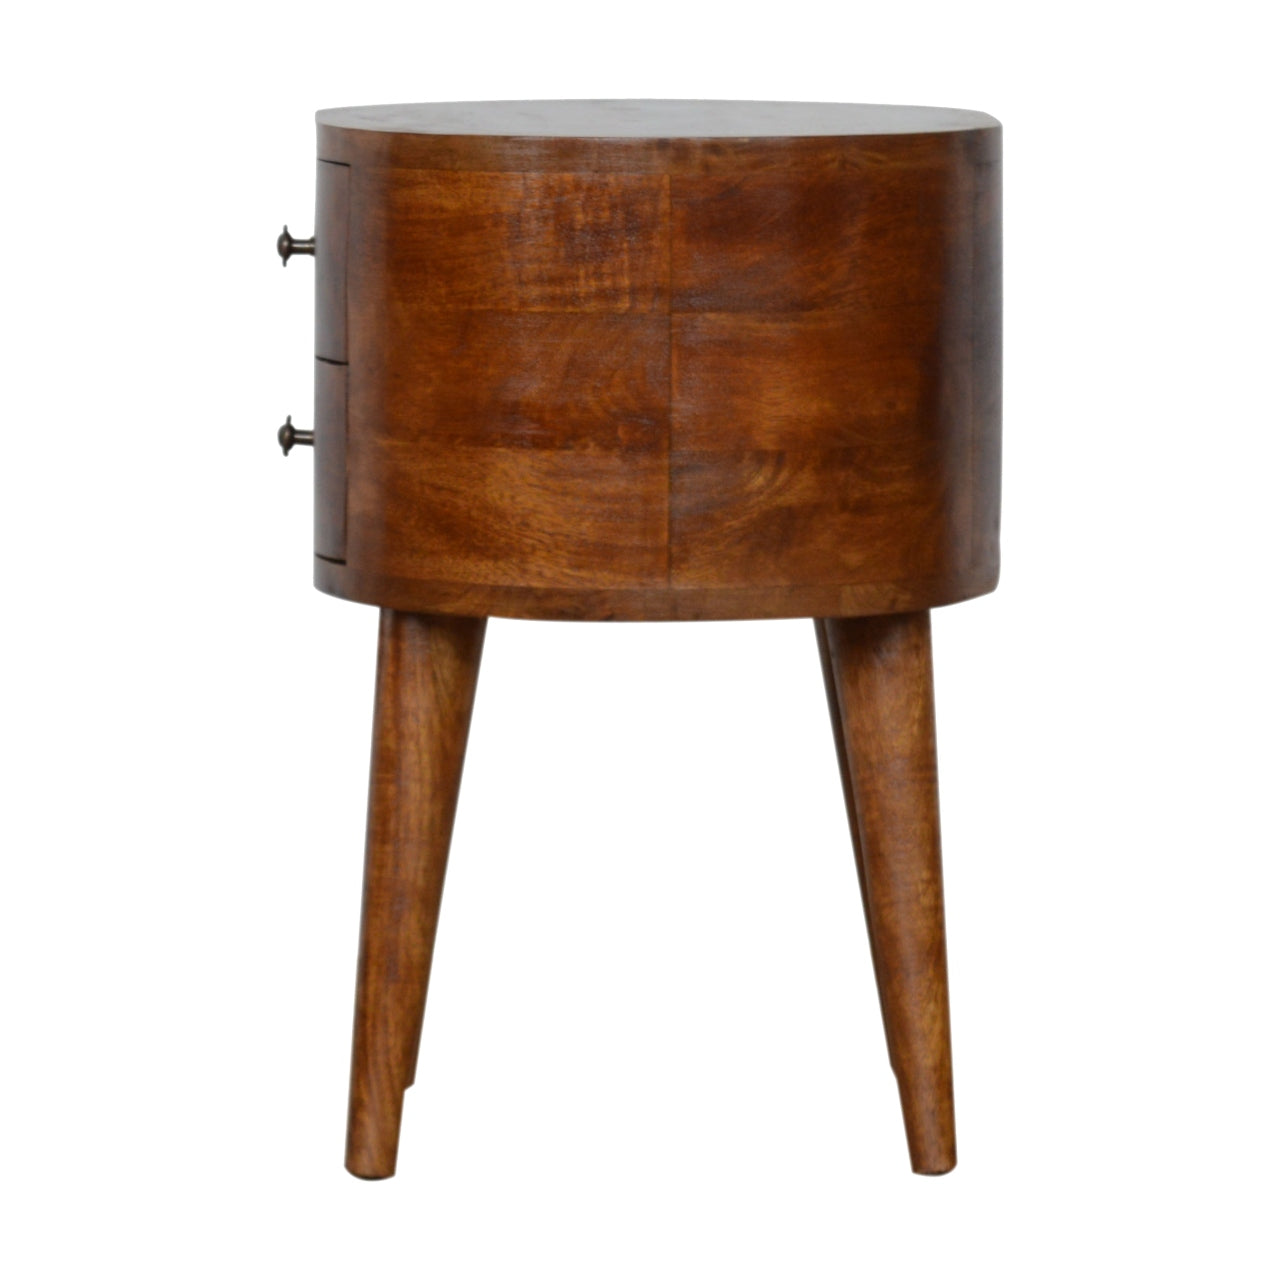 Regent Handmade Solid Wood Bedside Table with 2 Drawers in Deep Chestnut Finish  | malletandplane.com